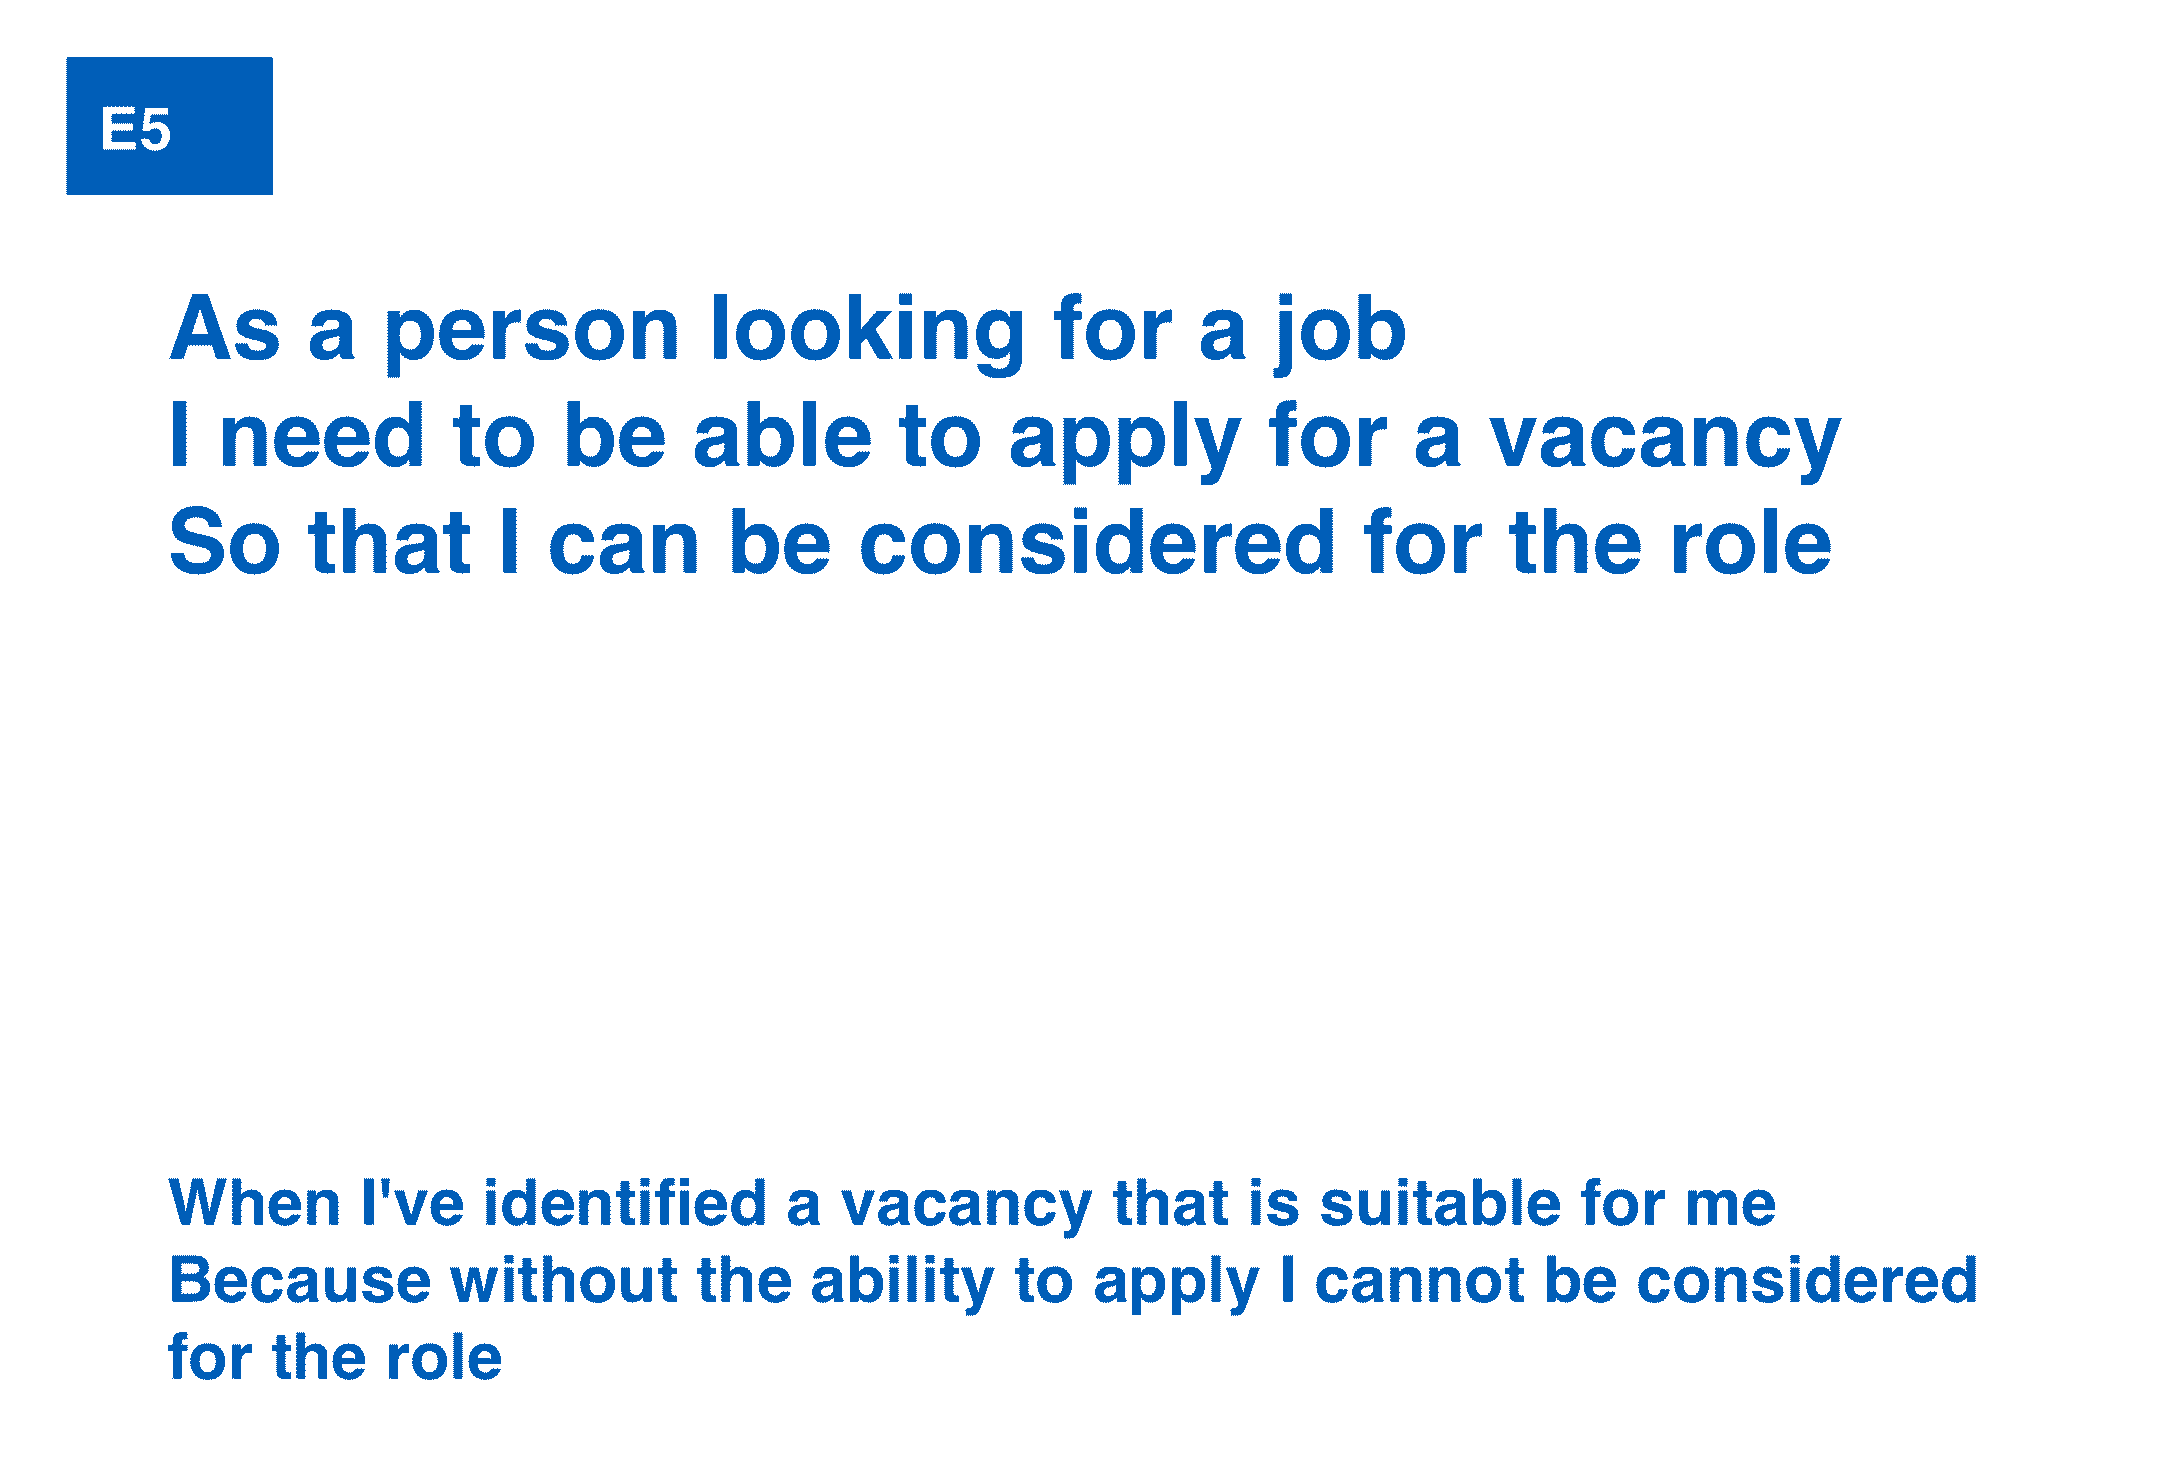 NHS Jobs user need